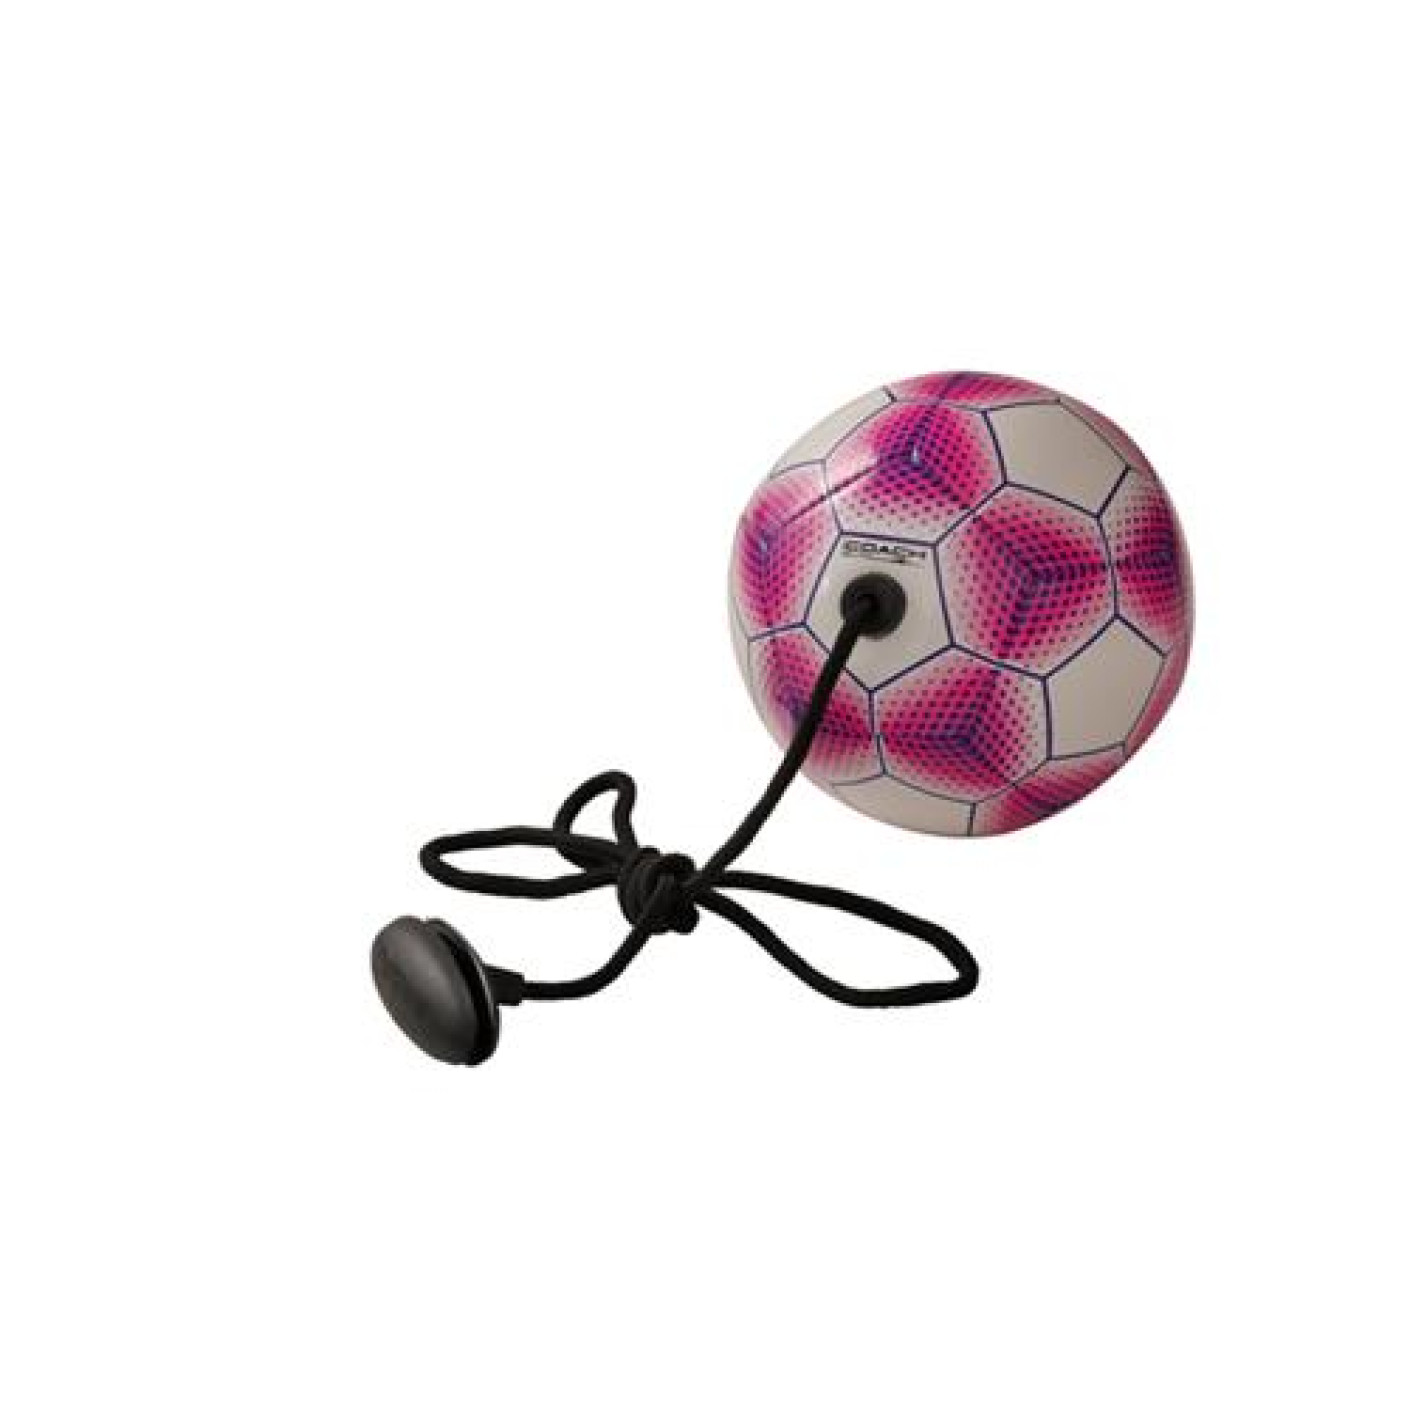 iCoach Mini Training Ballon de Foot 3.0 Rose